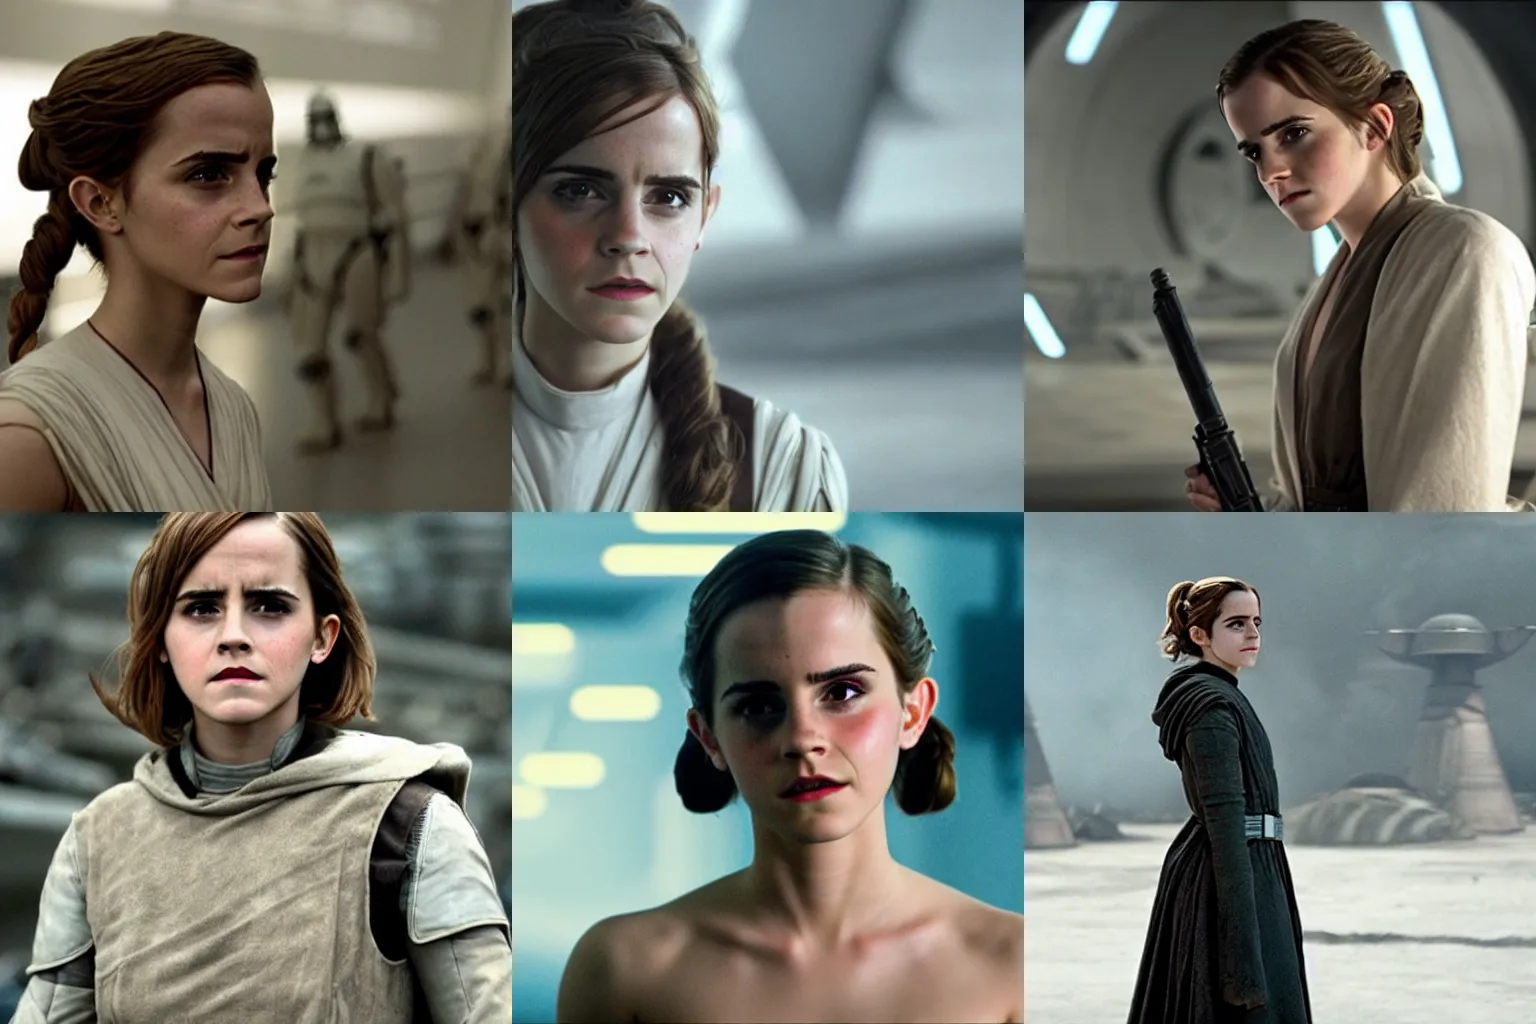 Prompt: Movie still of Emma Watson in Star Wars